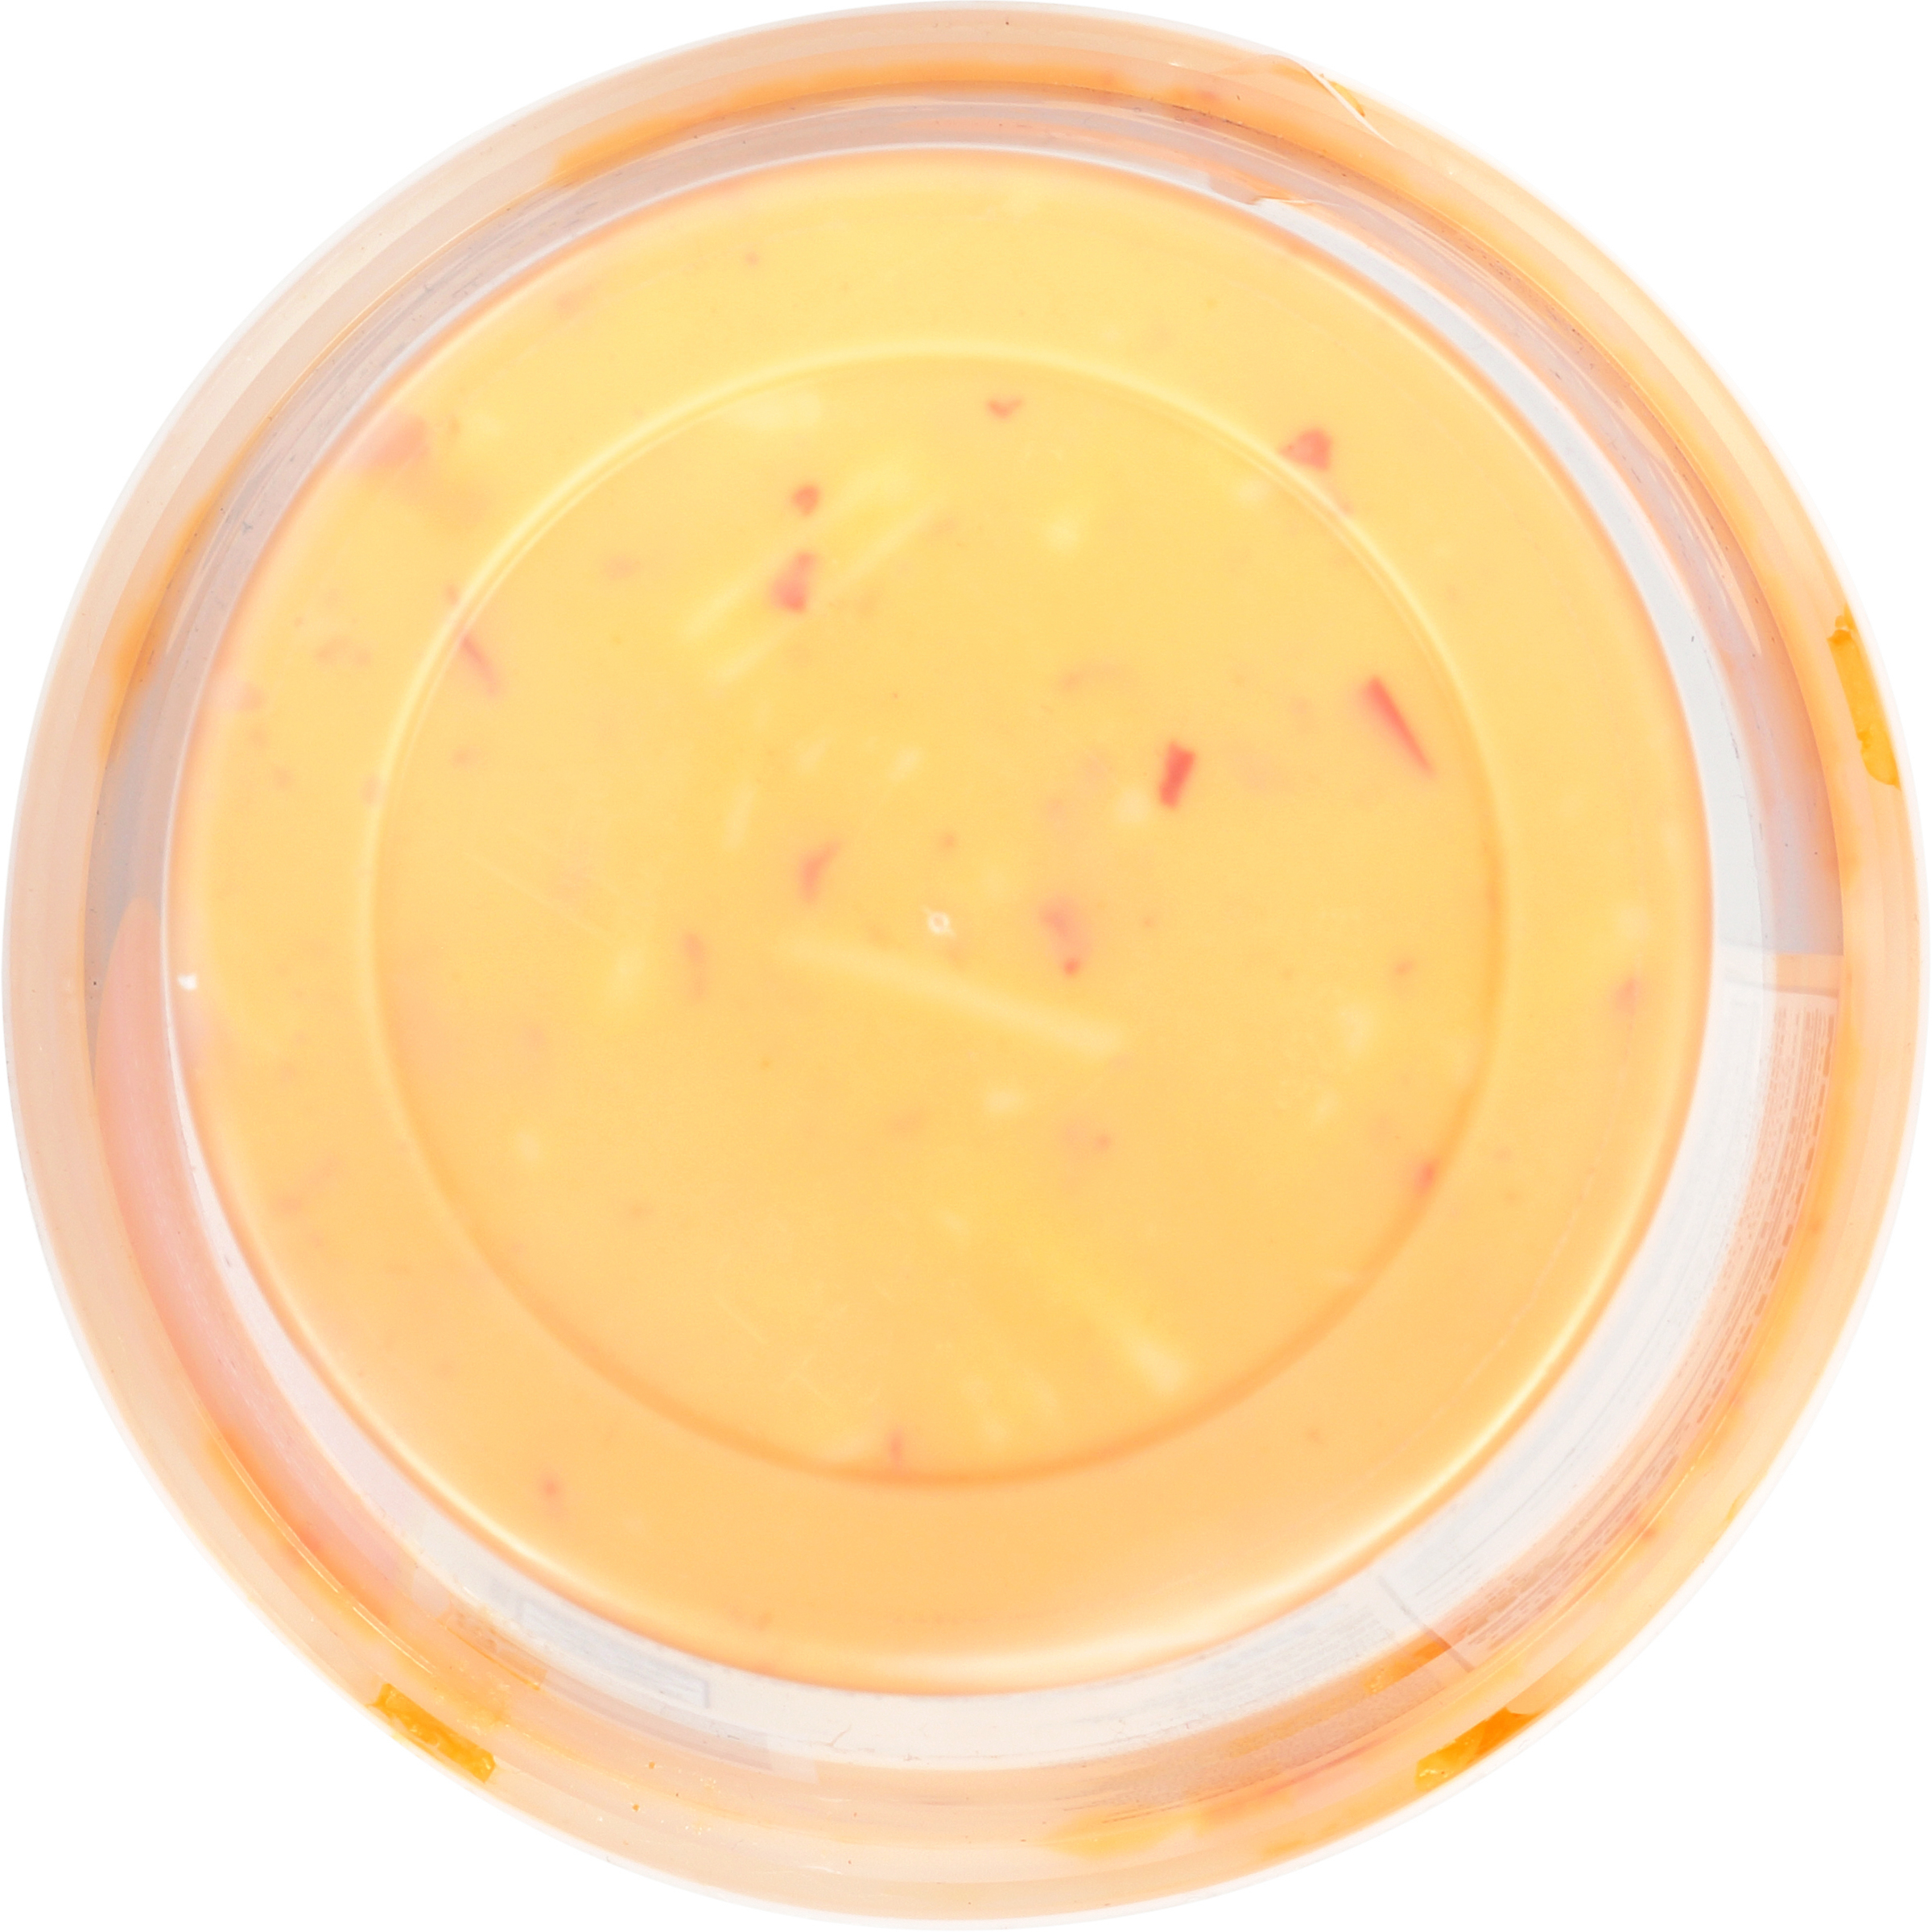 Price's Original Flavored Pimiento Cheese Spread, 12 oz., Tub, Refrigerated - image 3 of 6